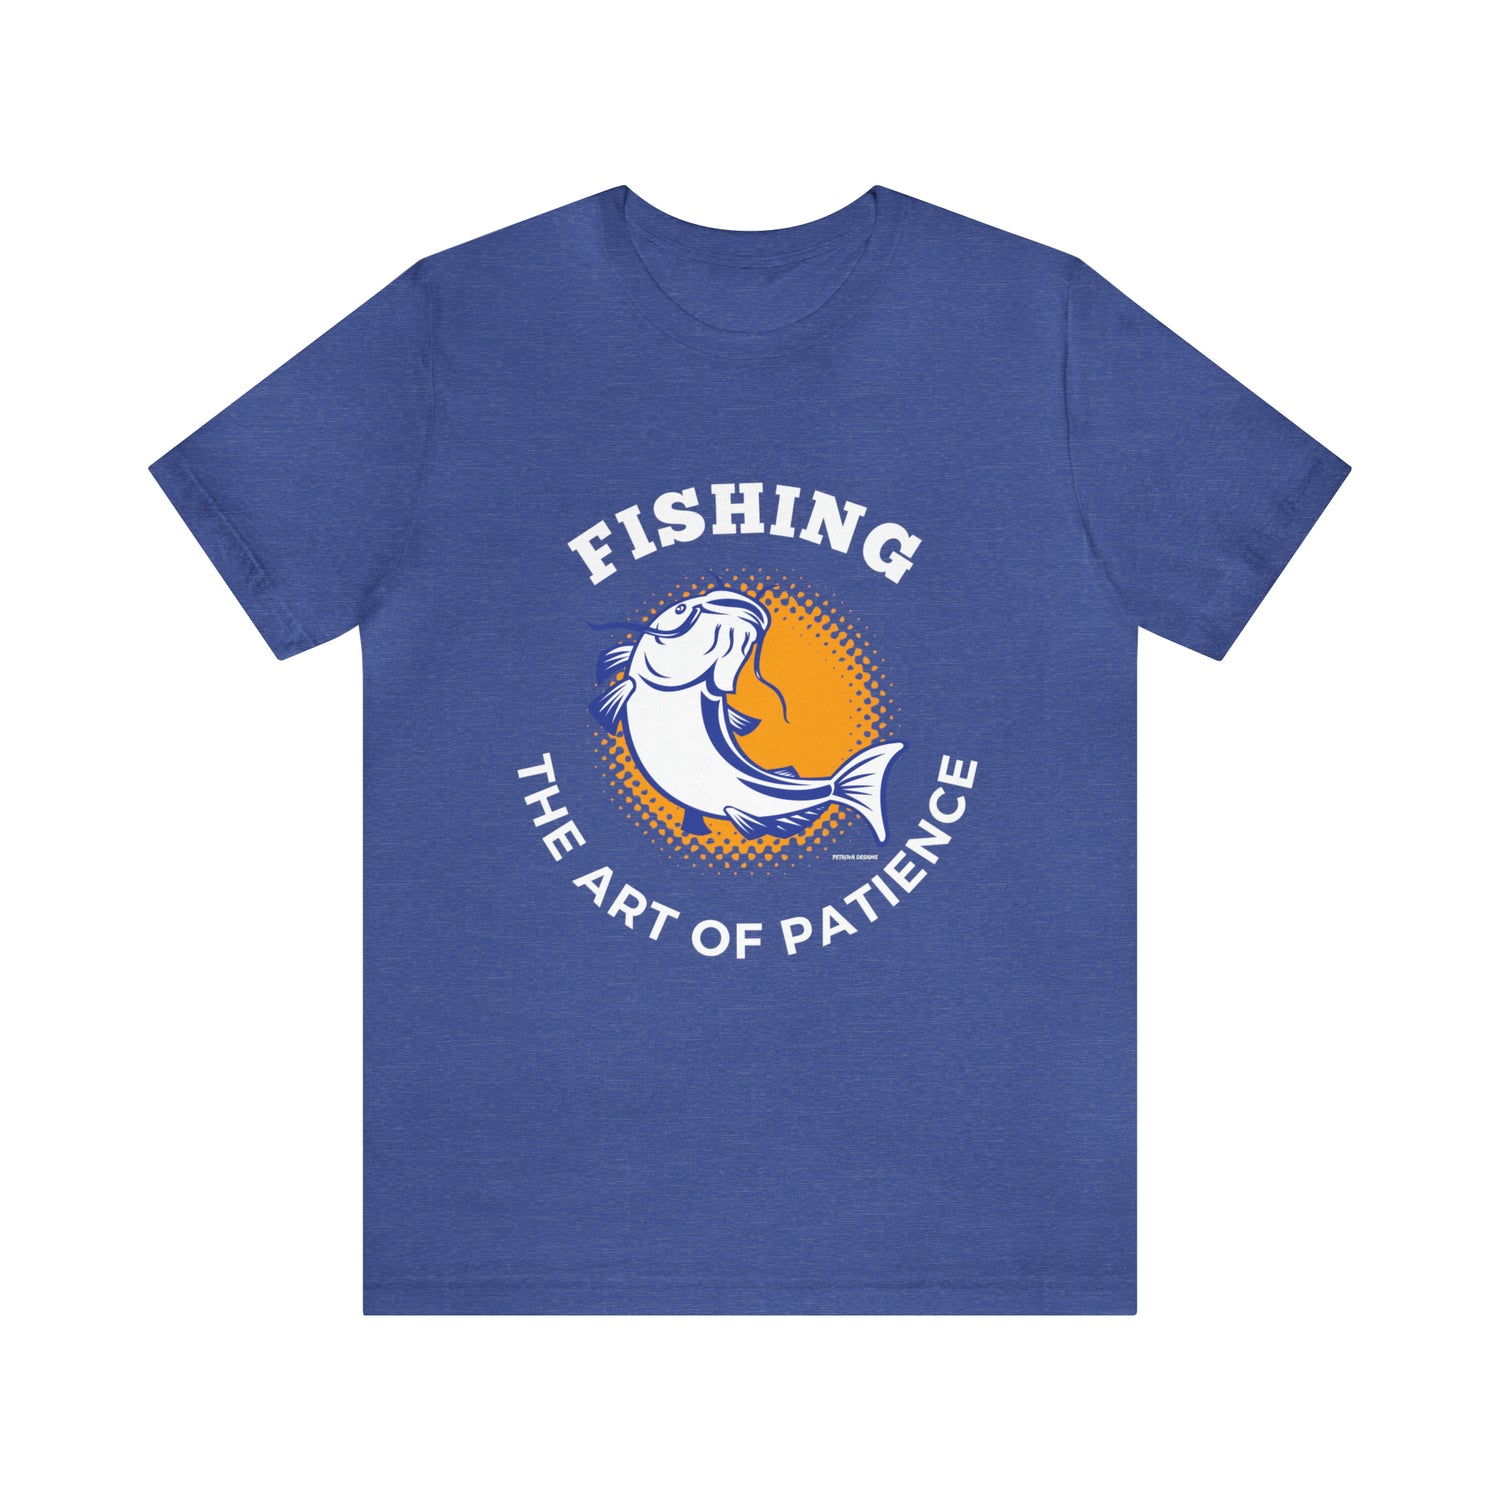 Heather True Royal T-Shirt Tshirt Design Gift for Friend and Family Short Sleeved Shirt Fishing Hobby Aesthetic Petrova Designs